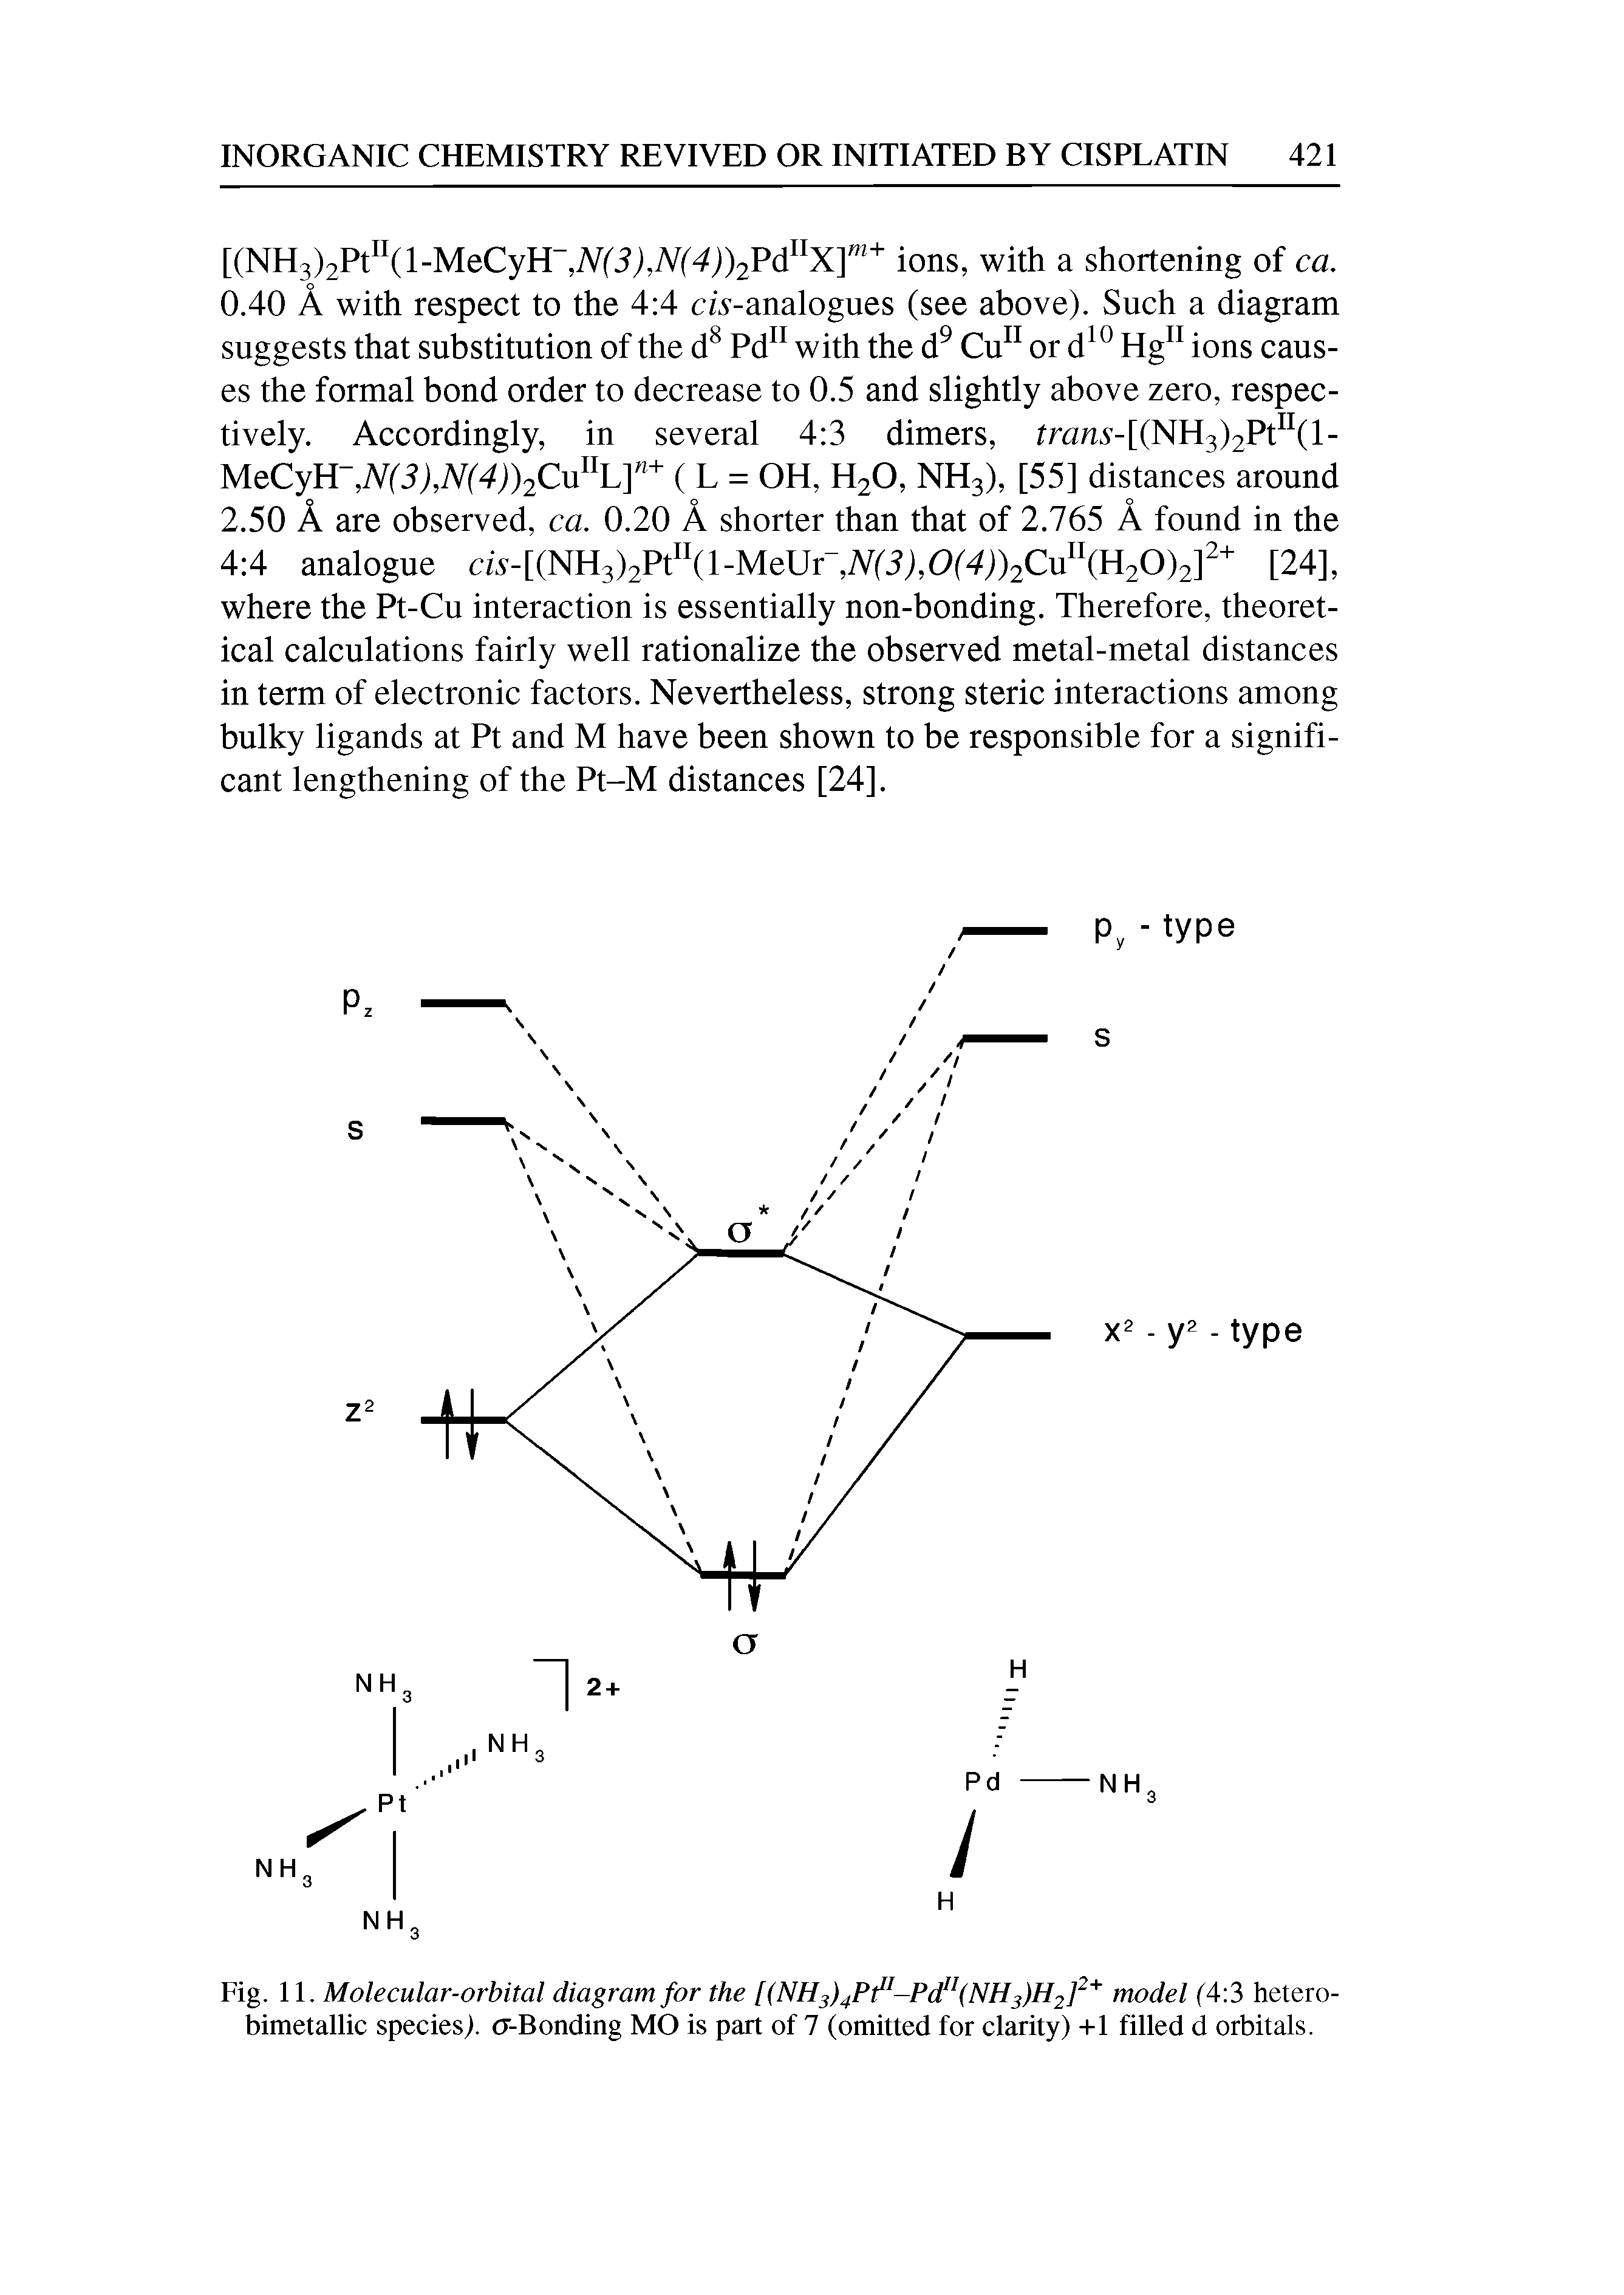 Fig. 11. Molecular-orbital diagram for the [(NH3)4PtJI-PdII(NH3)H2]2+ model (4 3 hetero-bimetallic species). <7-Bonding MO is part of 7 (omitted for clarity) +1 filled d orbitals.